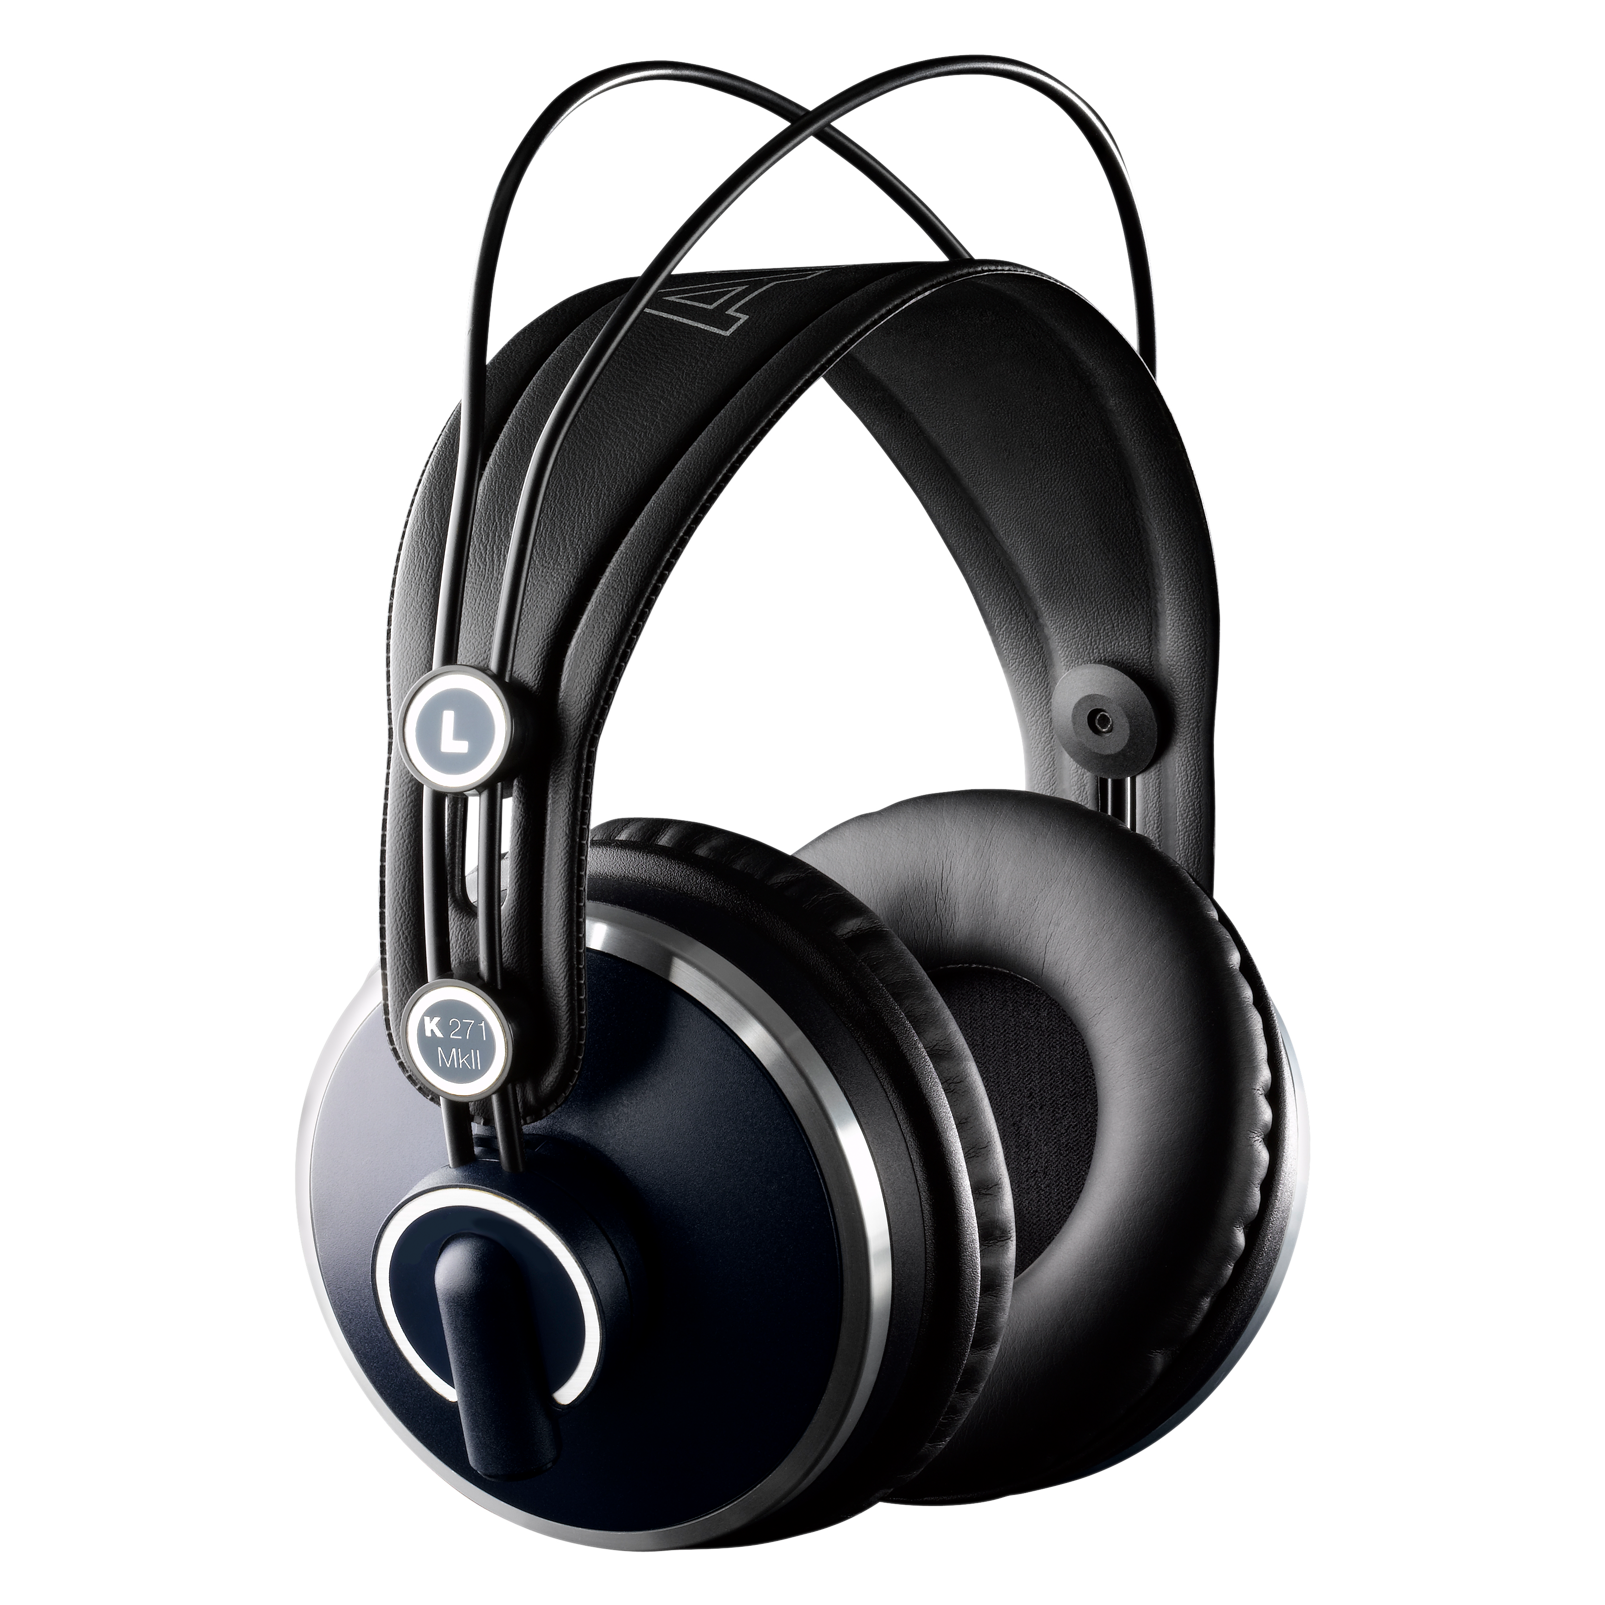 K271 MKII (B-Stock) - Black - Professional studio headphones - Hero